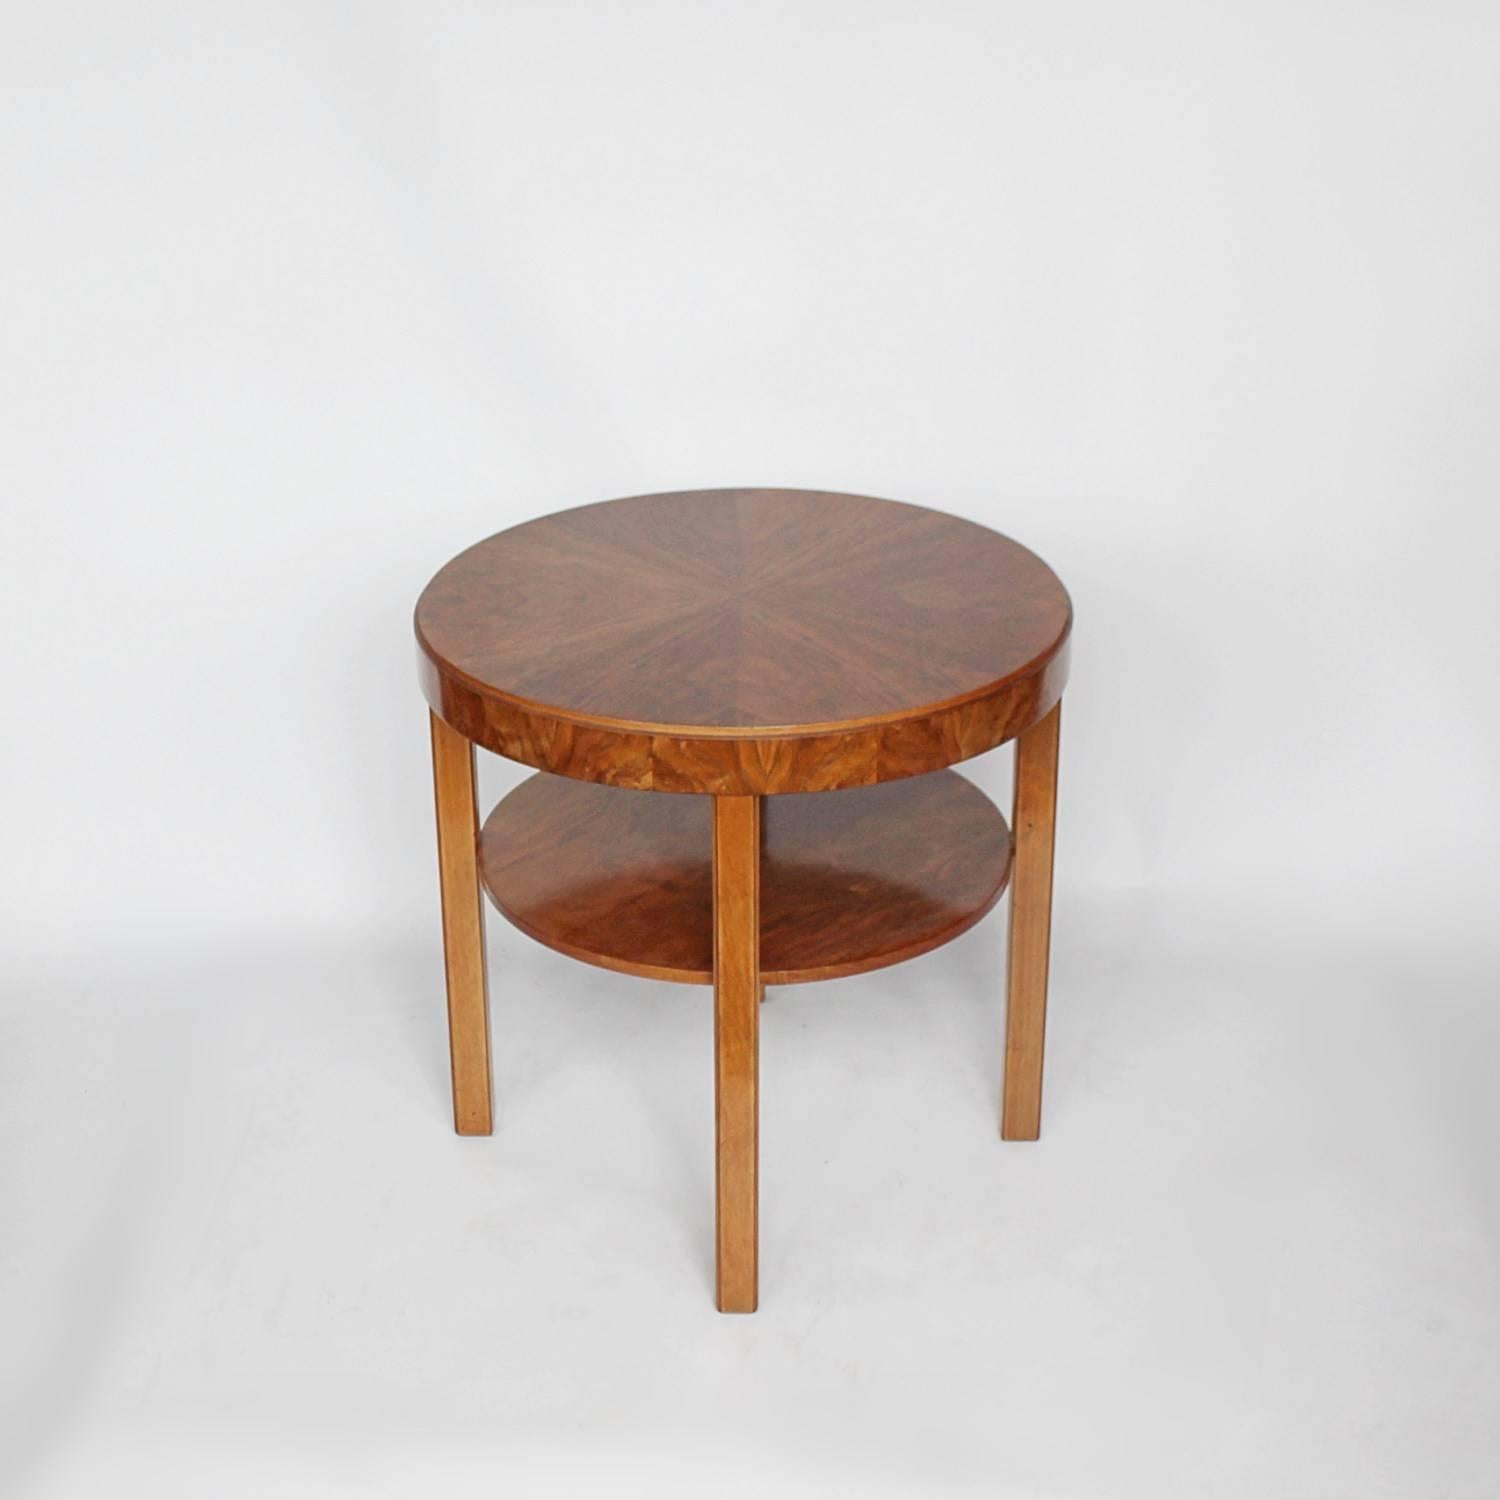 An Art Deco, circular side table with integral shelf in figured walnut.

 